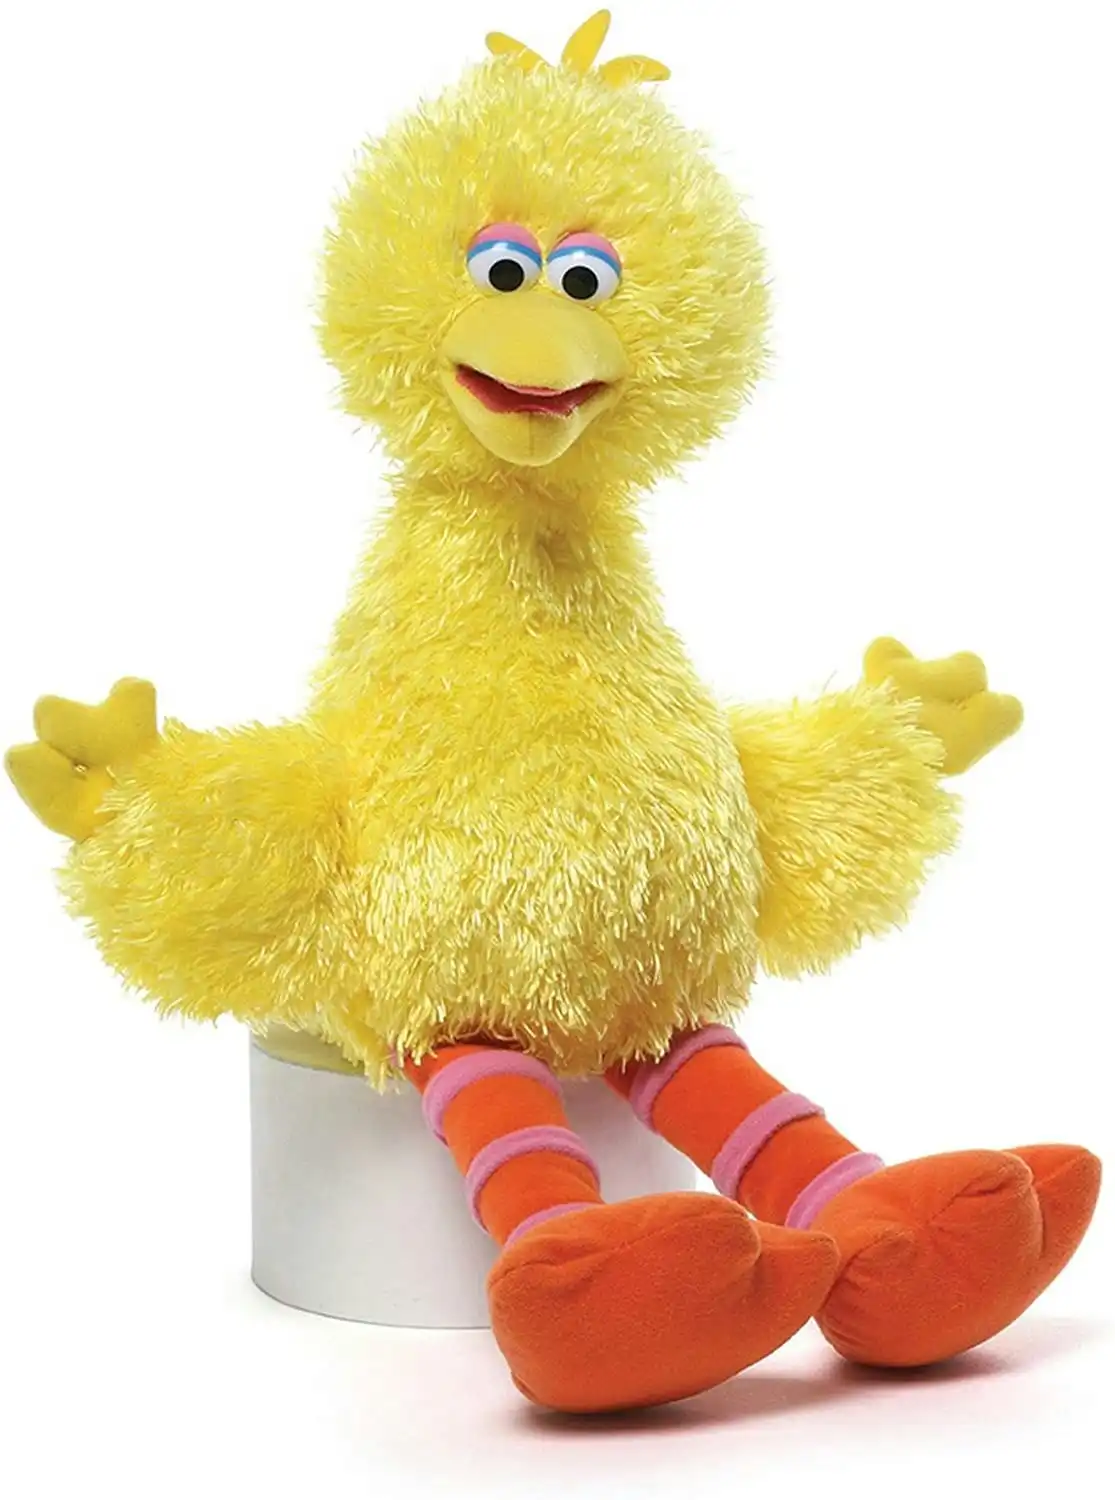 GUND - Sesame Street Big Bird Stuffed Animal